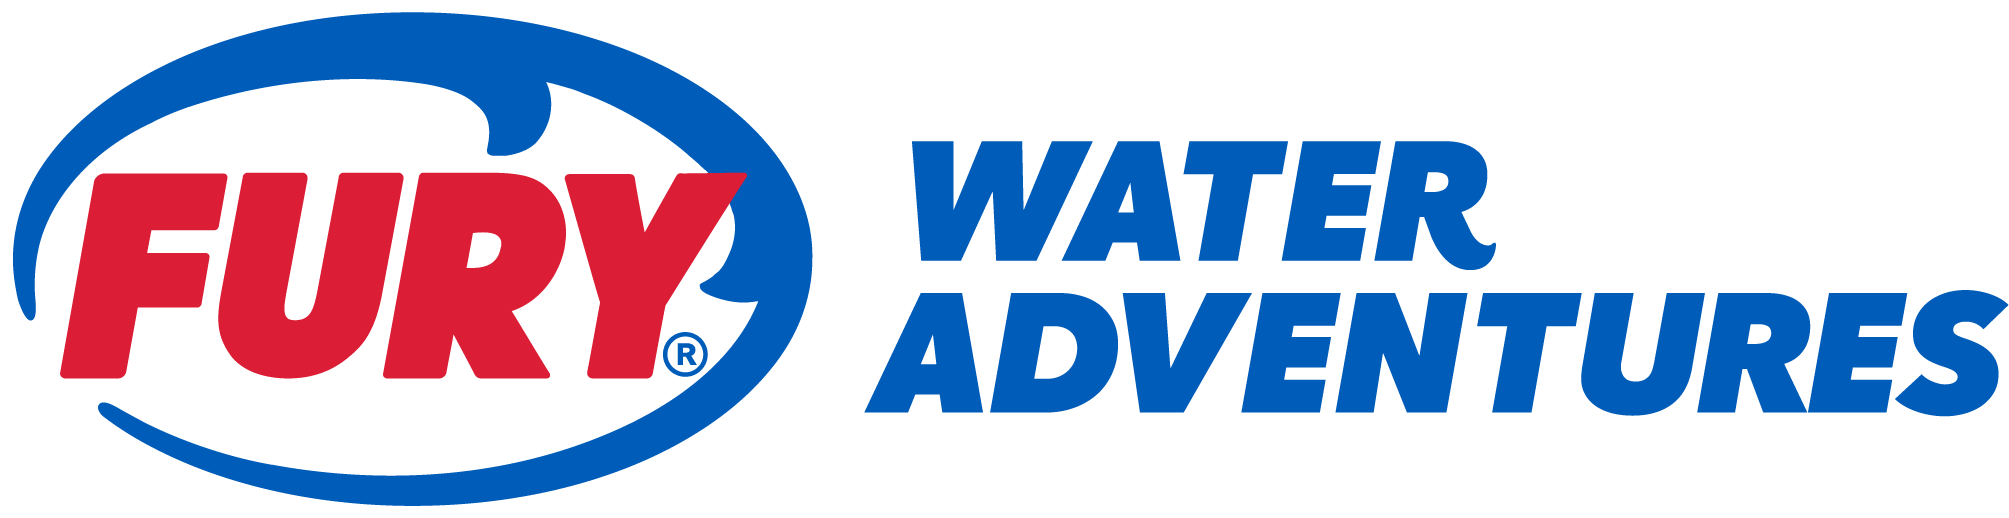 Fury Water Adventures Logo